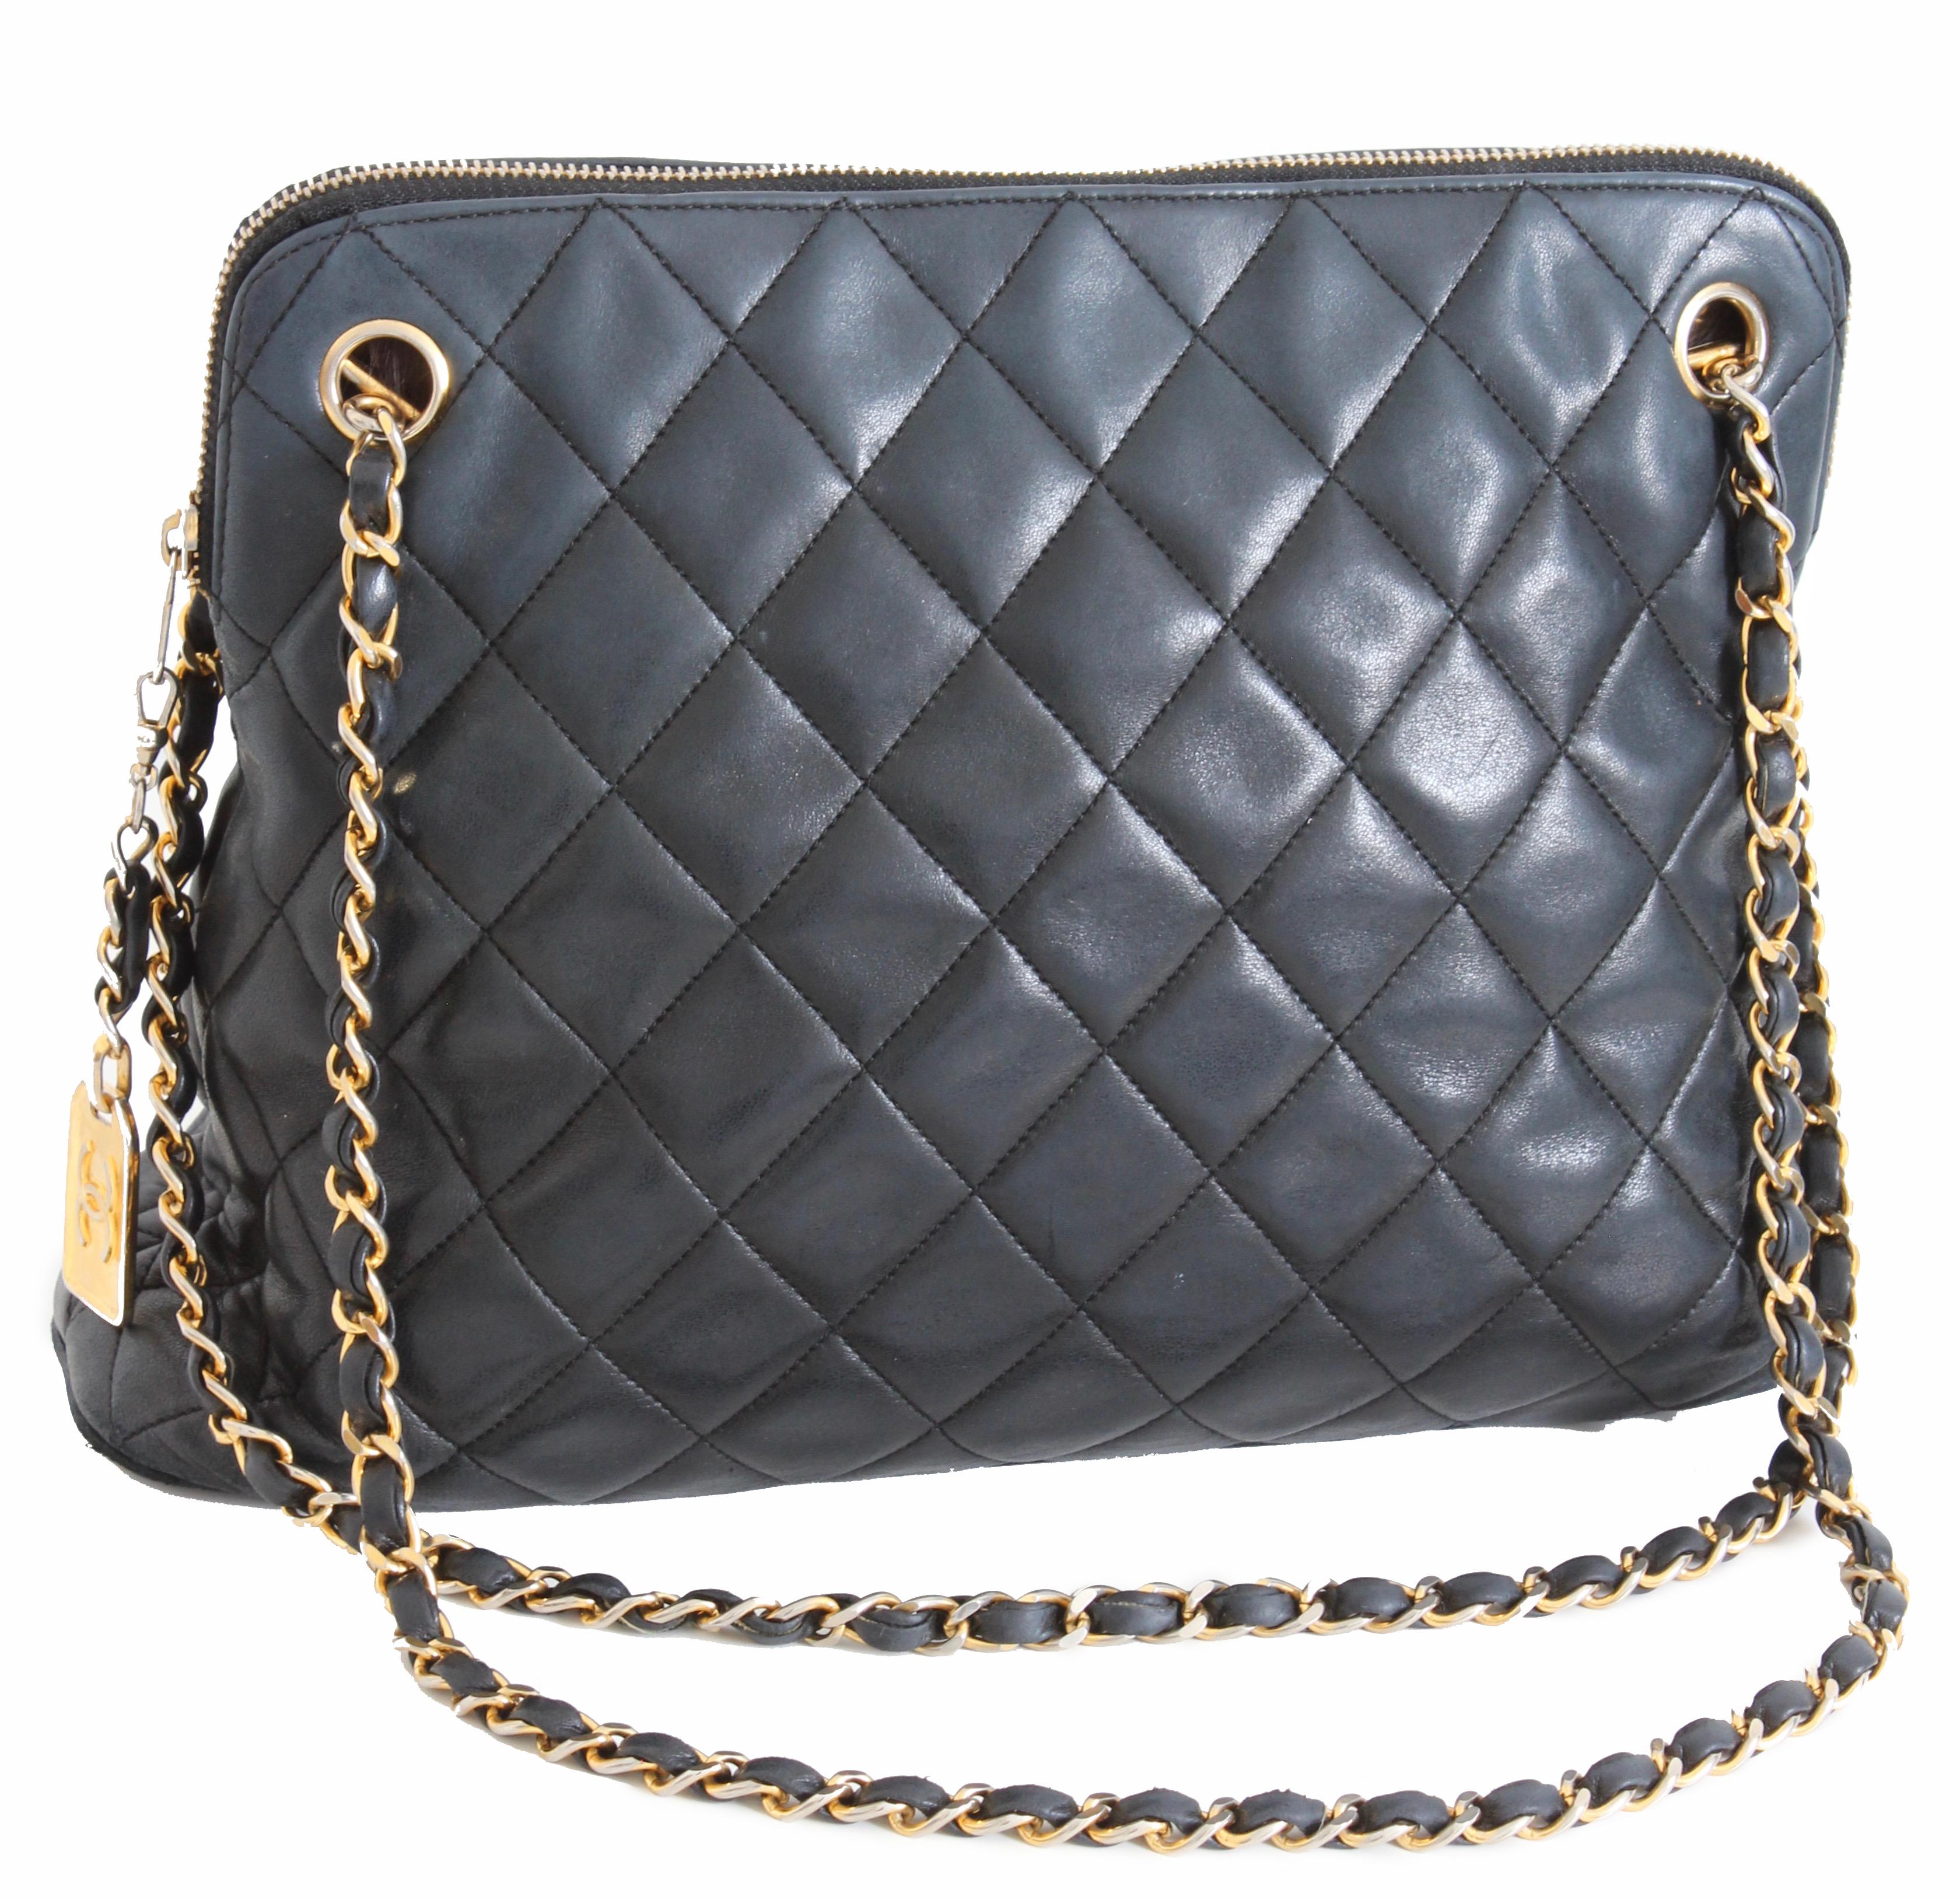 Iconic Chanel Shoulder Bag Lambskin Matelasse Leather Chain Straps + Dust Bag